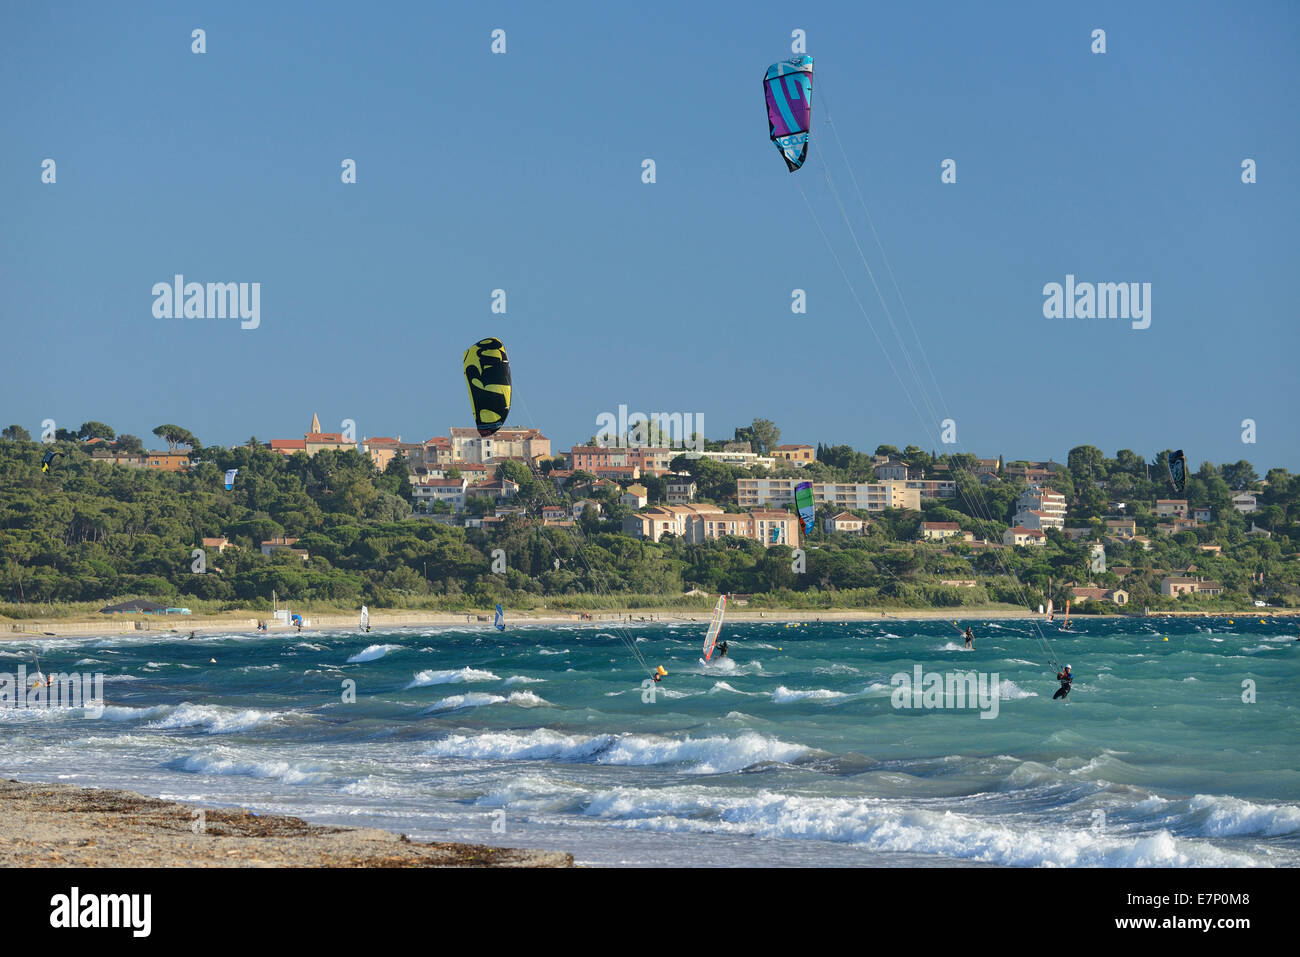 Francia, Europa, Provence-Alpes-Côte d'Azur, L'Almanarre, Spiaggia, Hyeres, surf, windsurf, sport, kite surfer, Mediterranea Foto Stock